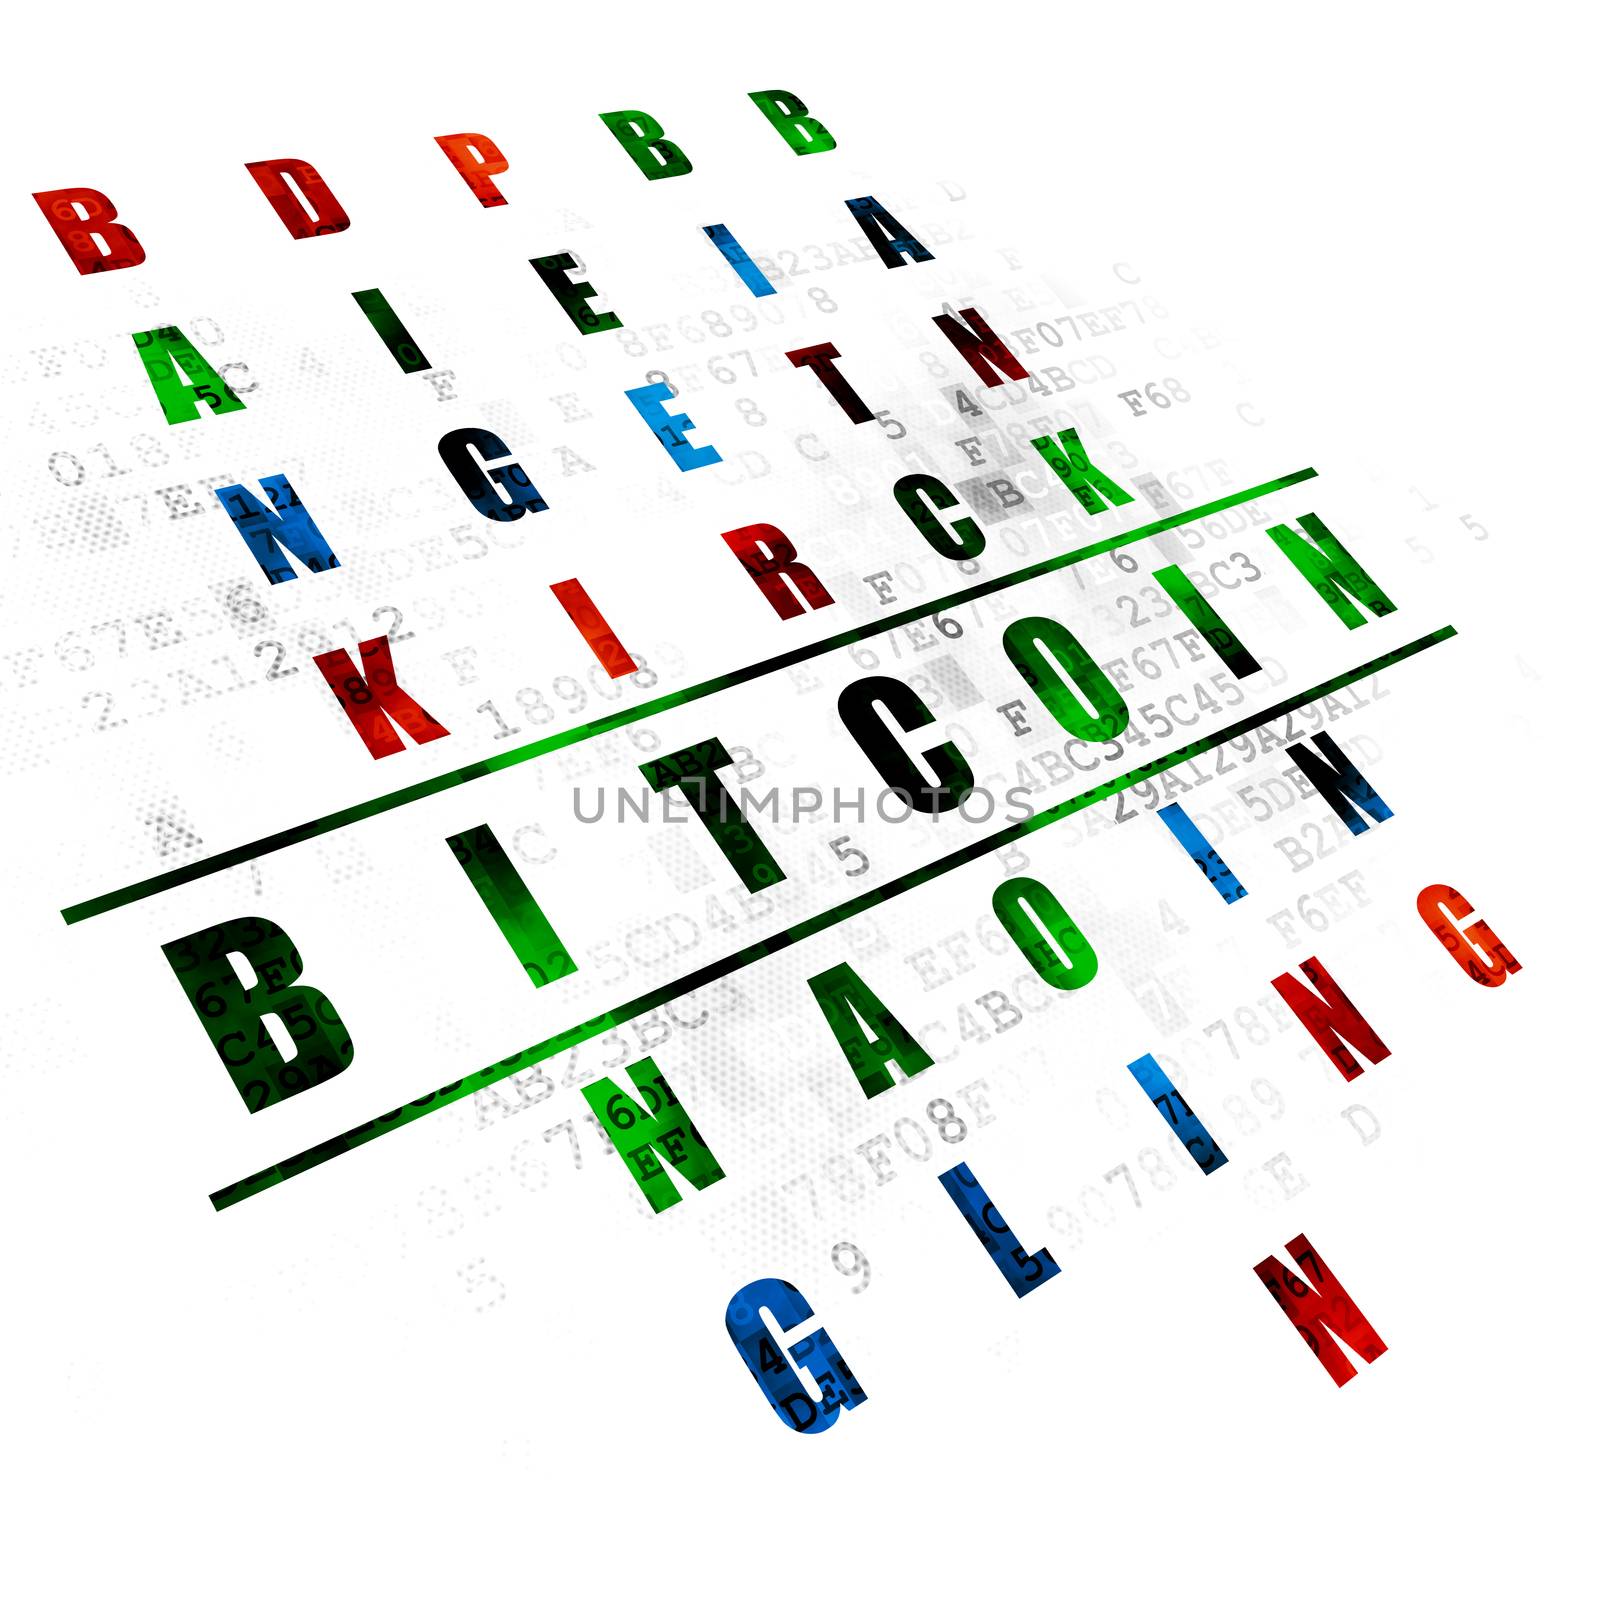 Blockchain concept: Bitcoin in Crossword Puzzle by maxkabakov